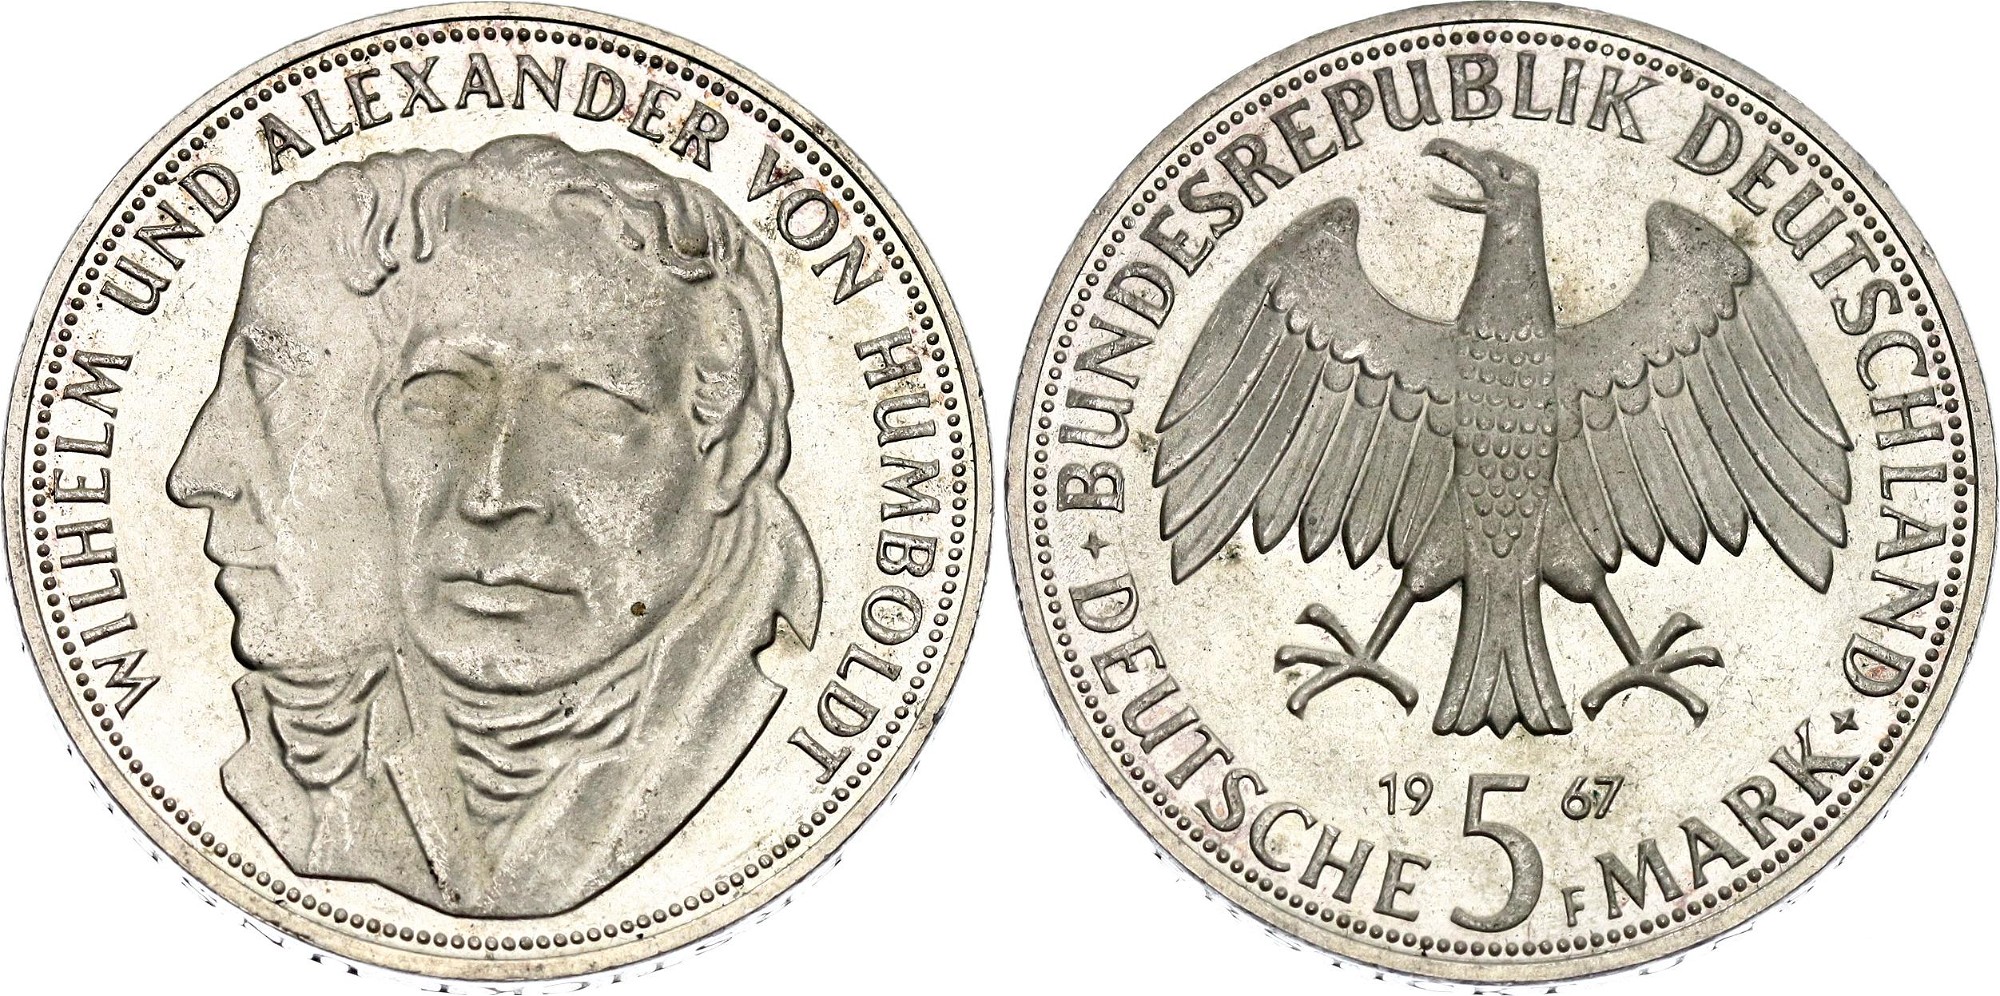 Germany - FRG 10 Deutsche Mark 1972 J | Katz Auction